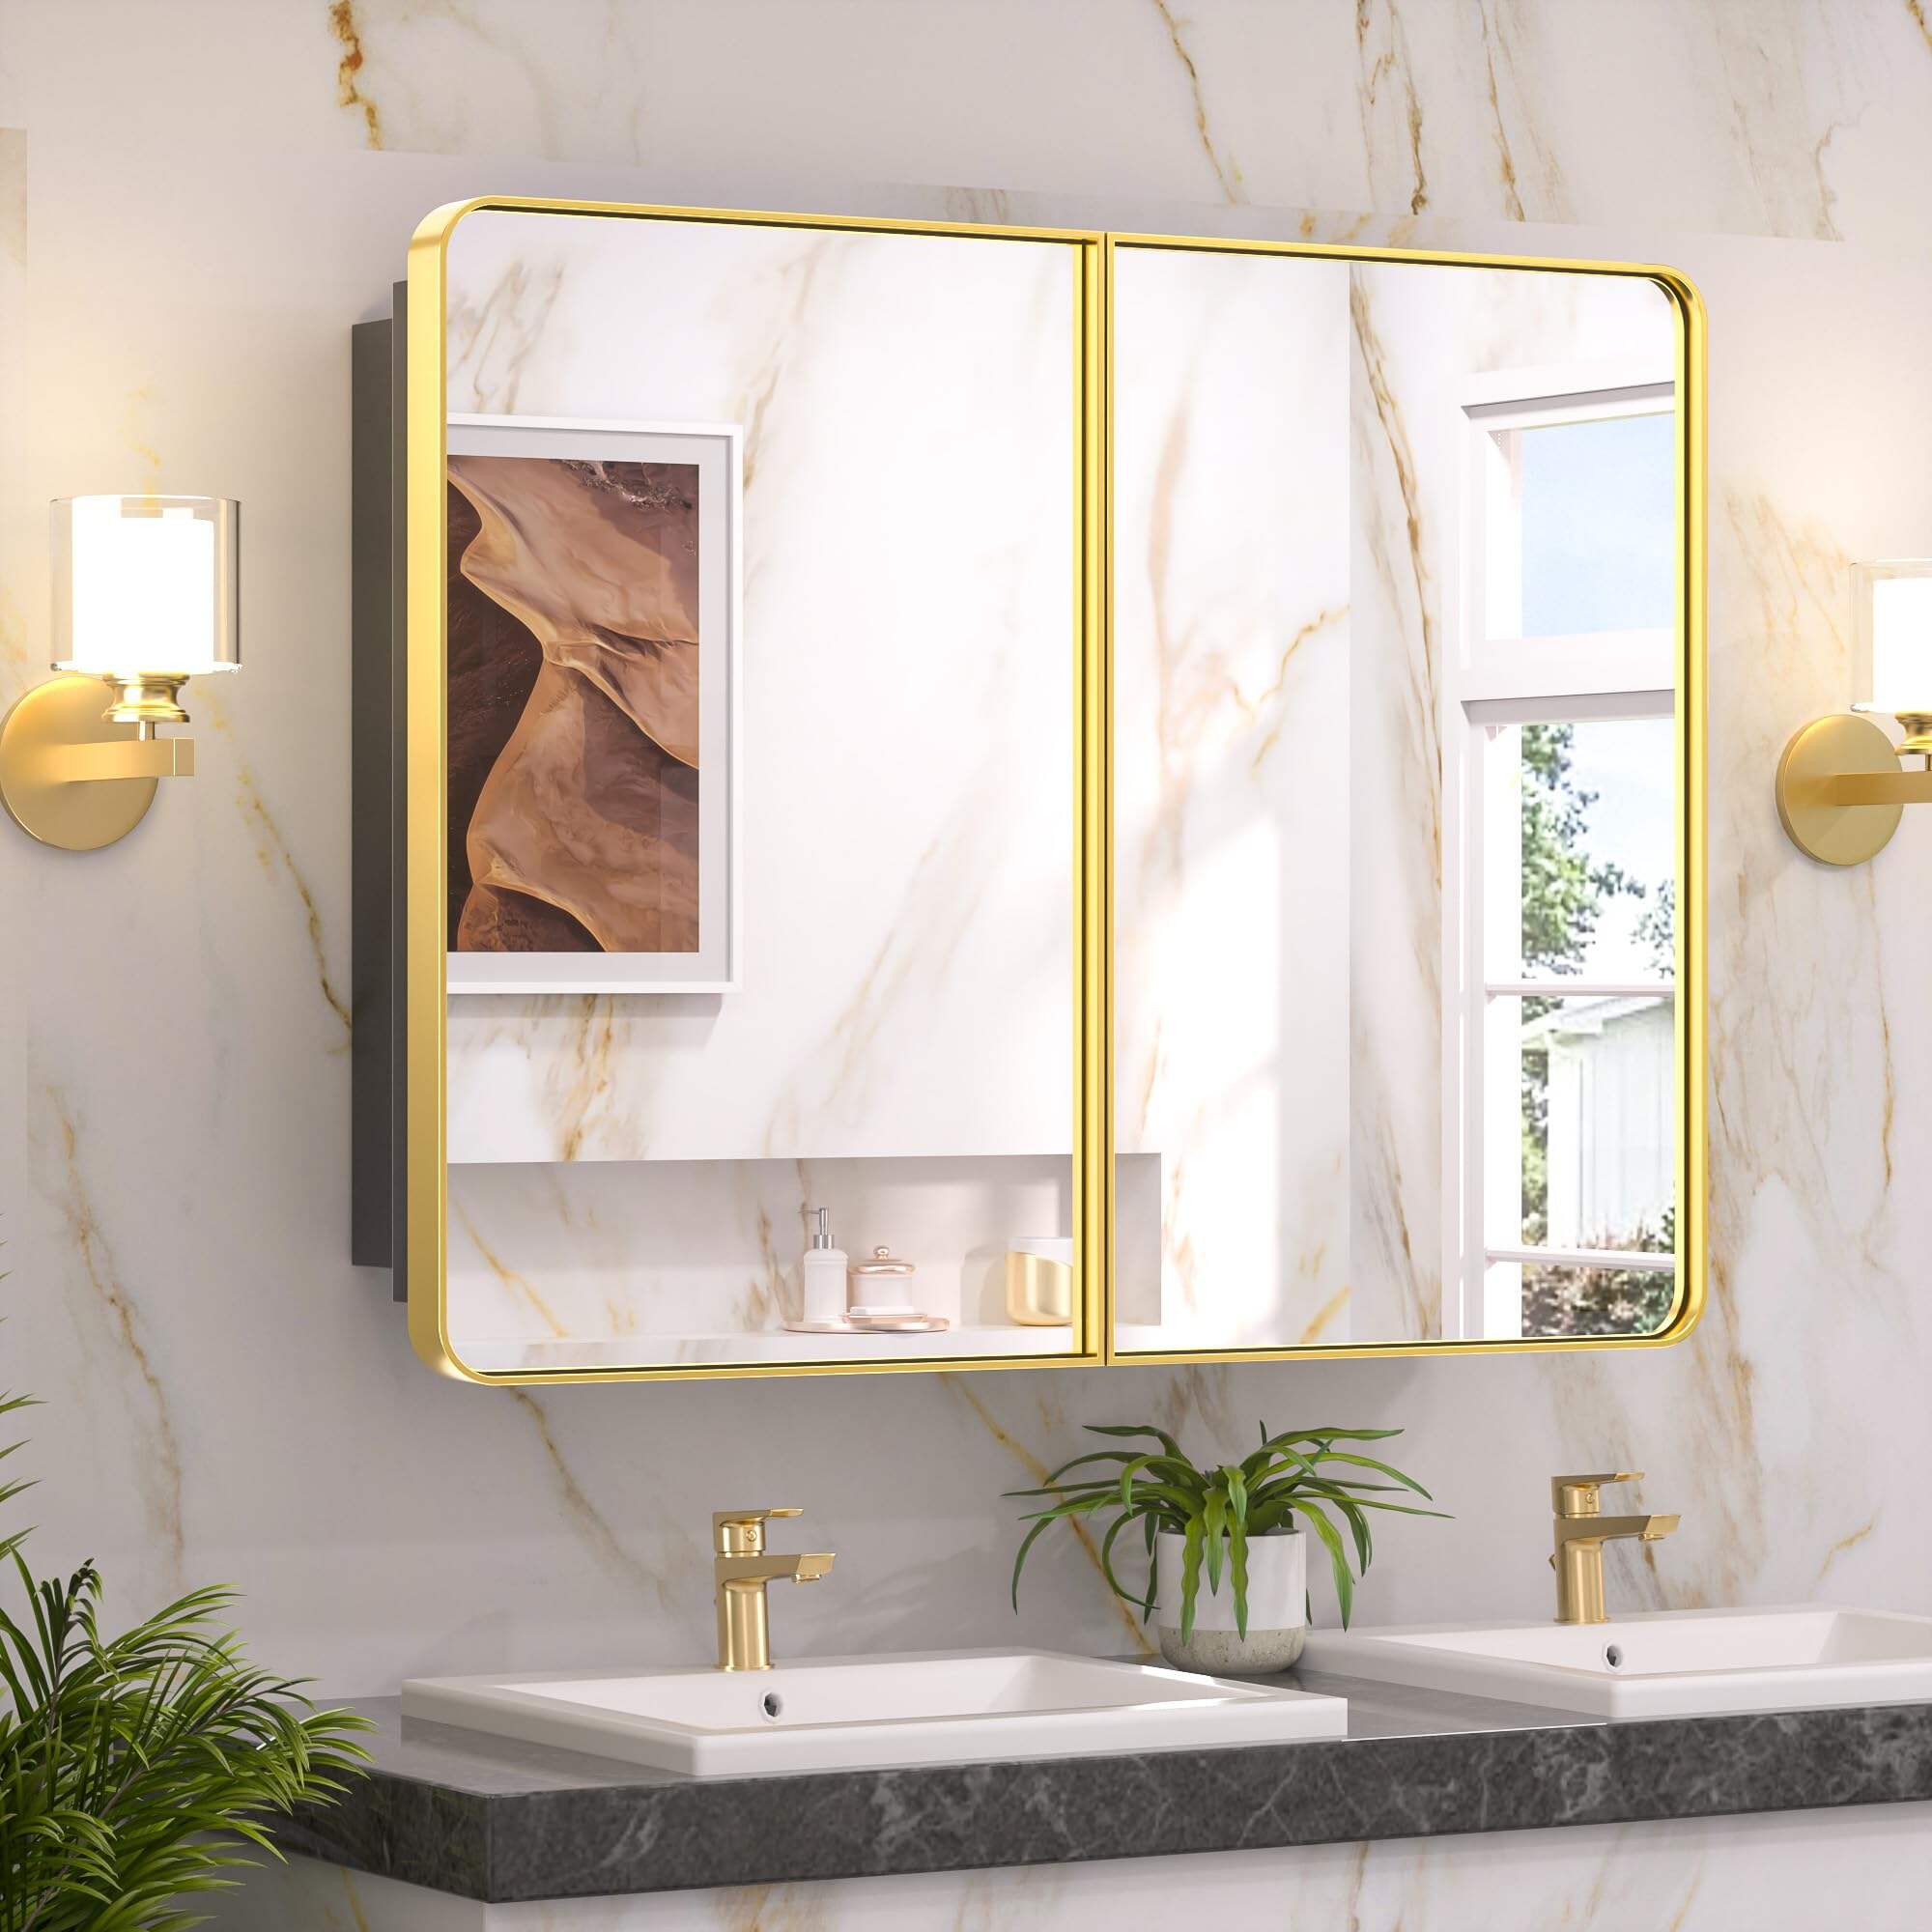 JJGullit bathroom mirror supplier 40 x 32 Inch Gold Bathroom Medicine Cabinets with Mirror Framed Adjustable Shelves Stainless Steel 2 Doors Soft Closing Hinge Recessed Large Modern Metal Gold Bathroom Mirror with Storage Cabinet